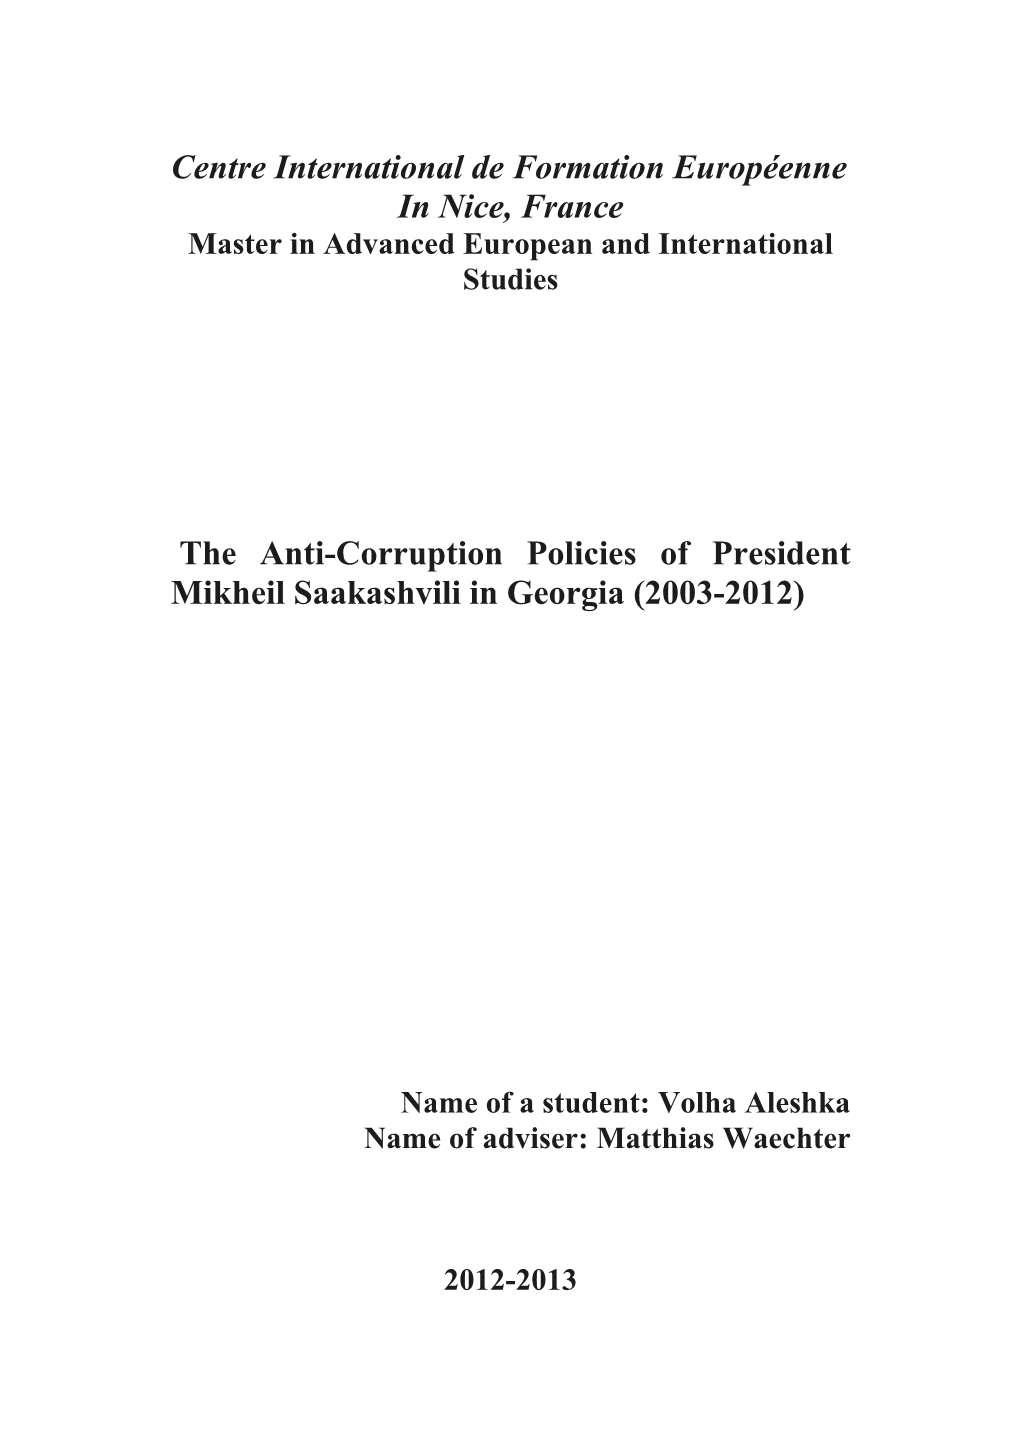 The Anti-Corruption Policies of President Mikheil Saakashvili in Georgia (2003-2012)